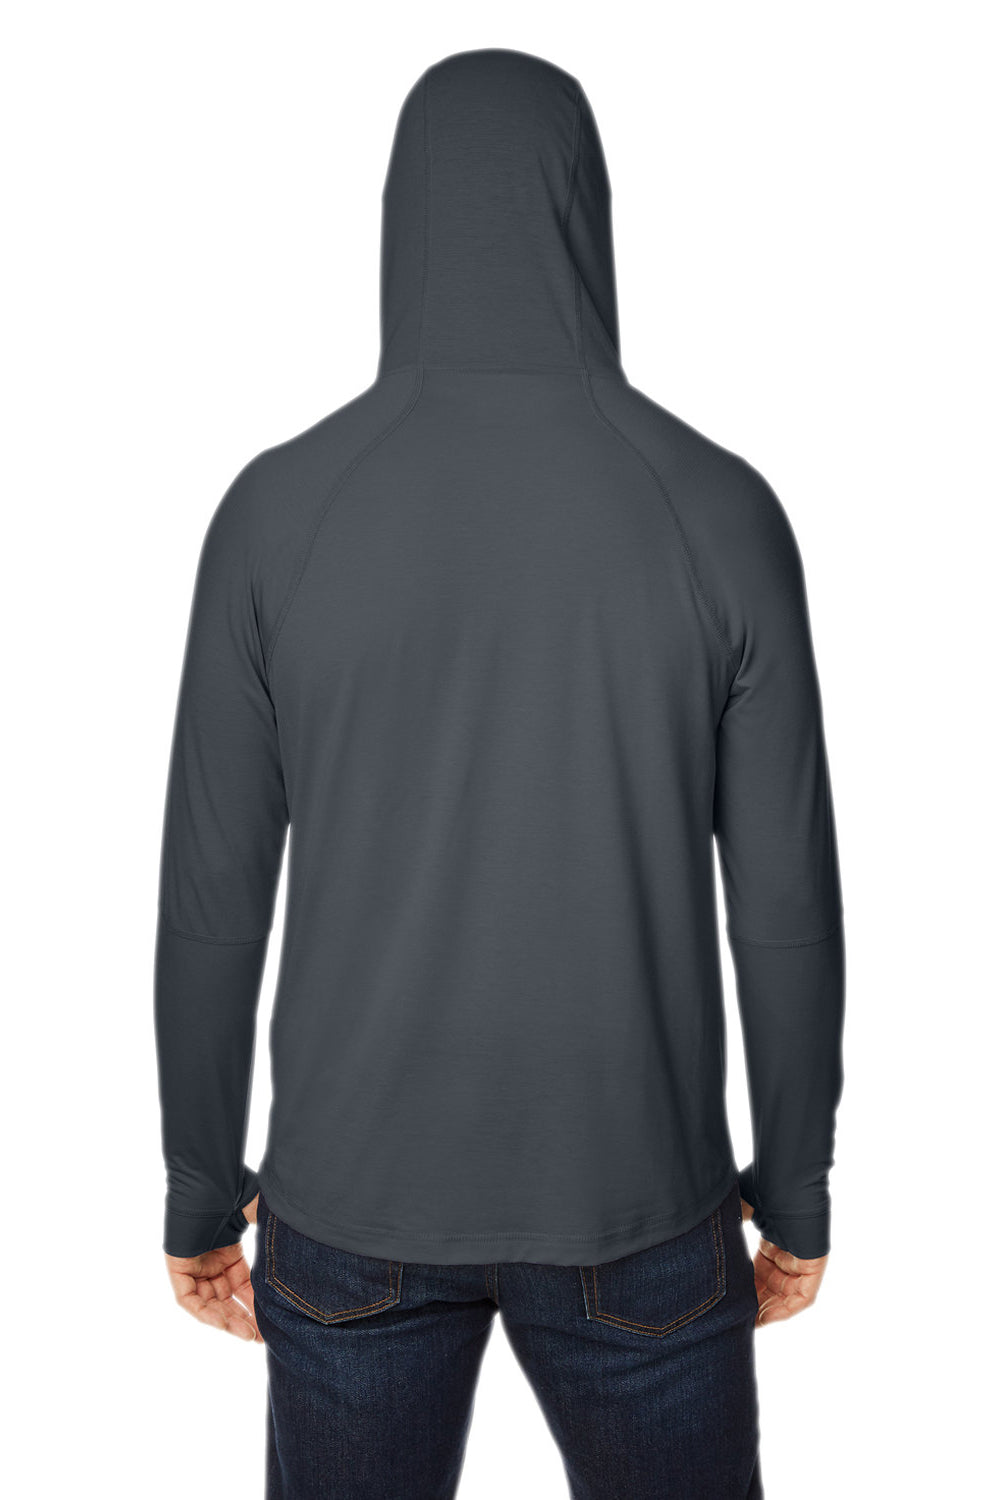 North End NE105 Mens Jaq Stretch Performance Hooded T-Shirt Hoodie Carbon Grey Back